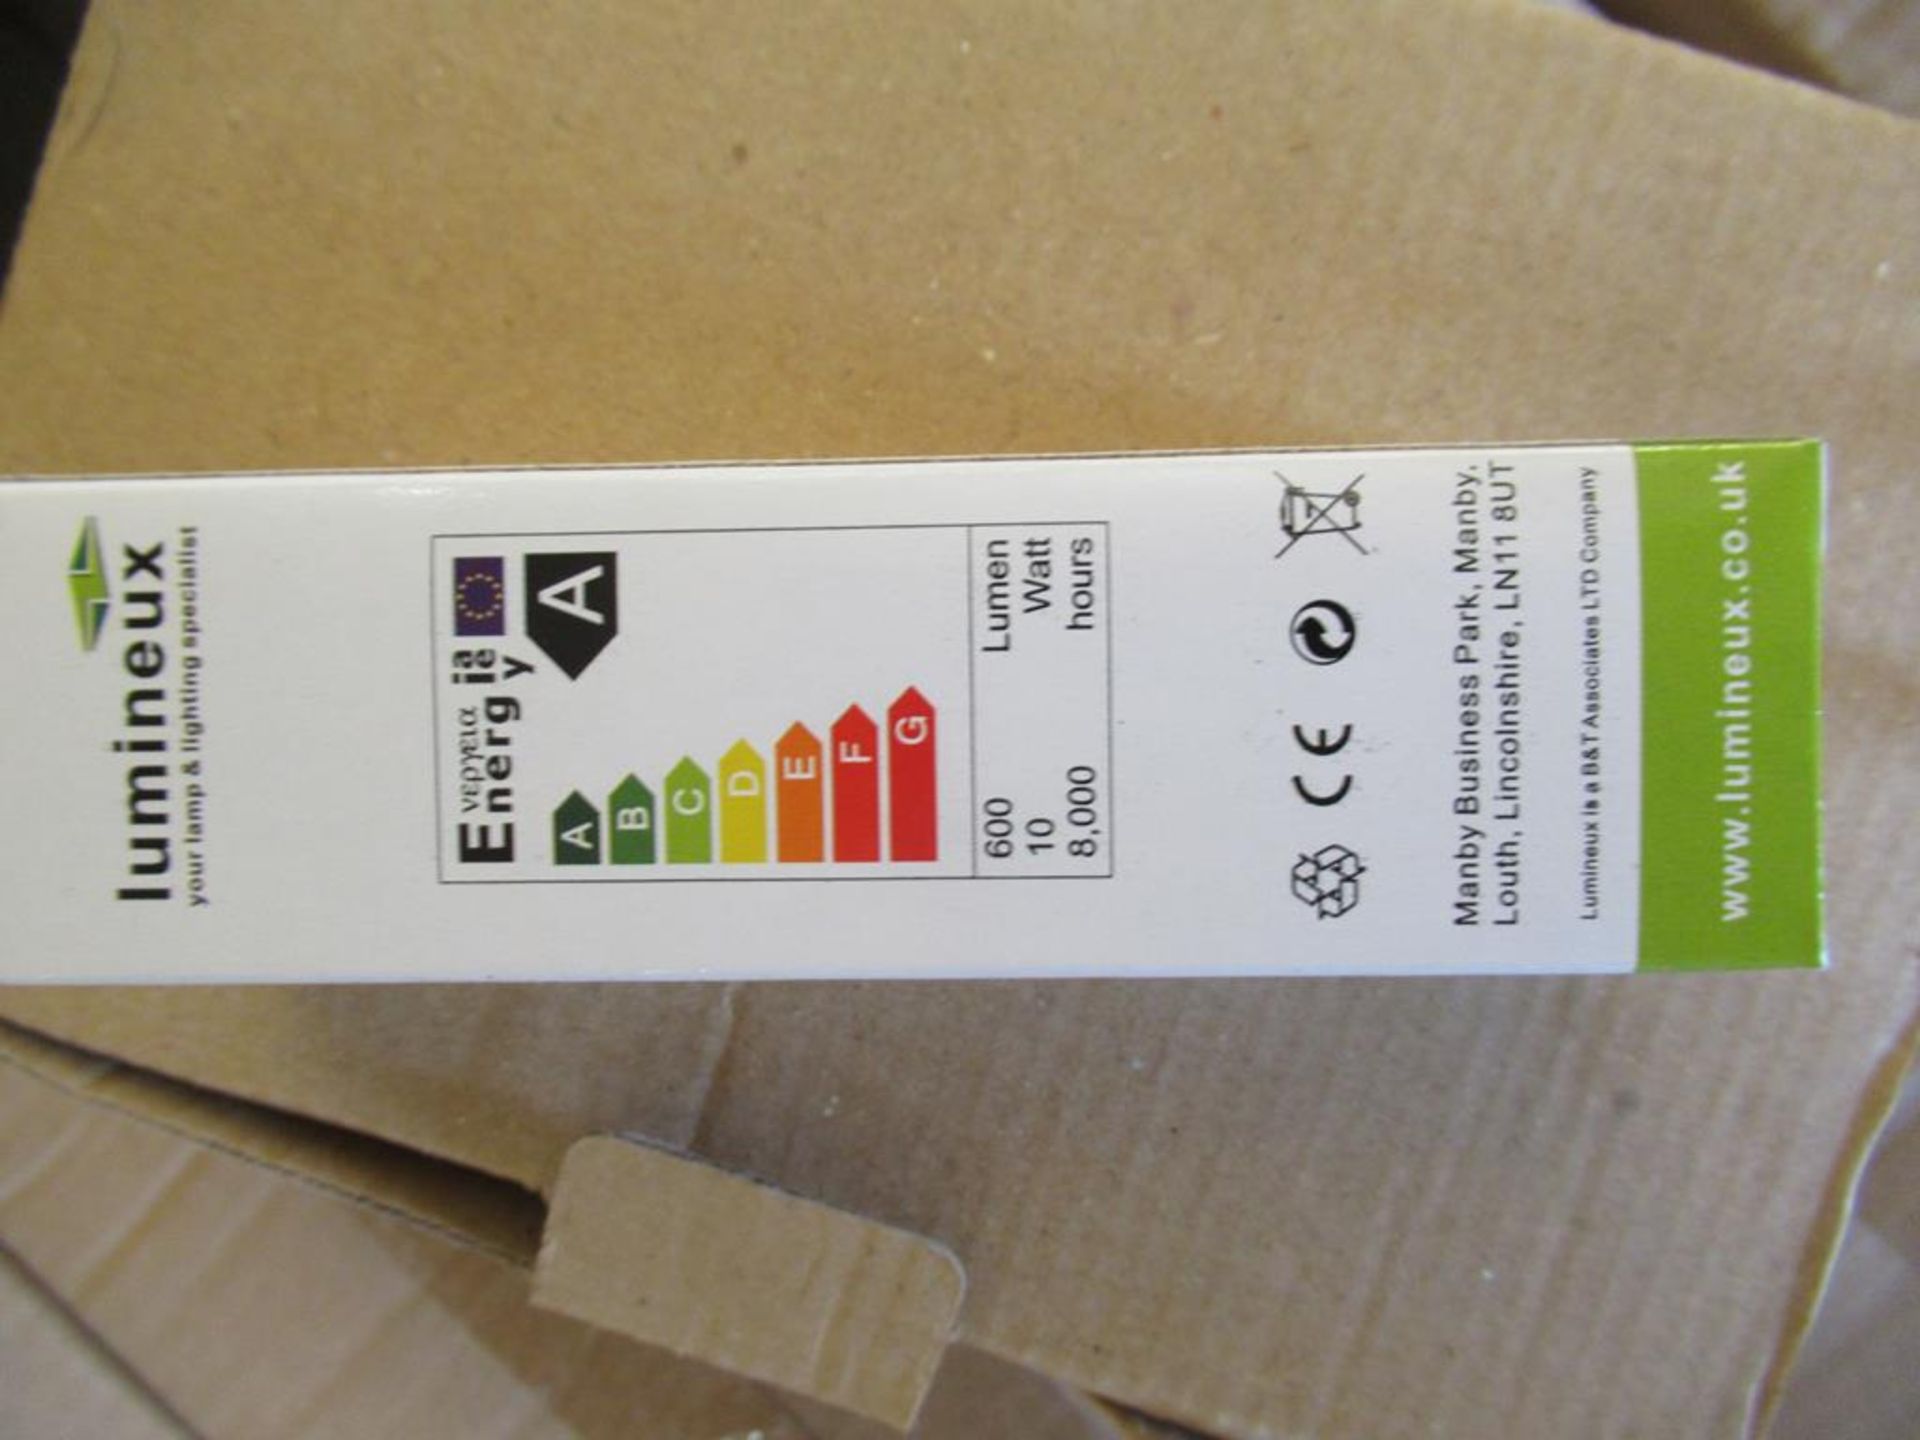 4x boxes of Lumineux G24D-1 2 Pin 4200k Cool White Fluorescent Bulbs (100pcs per box) - Image 4 of 4